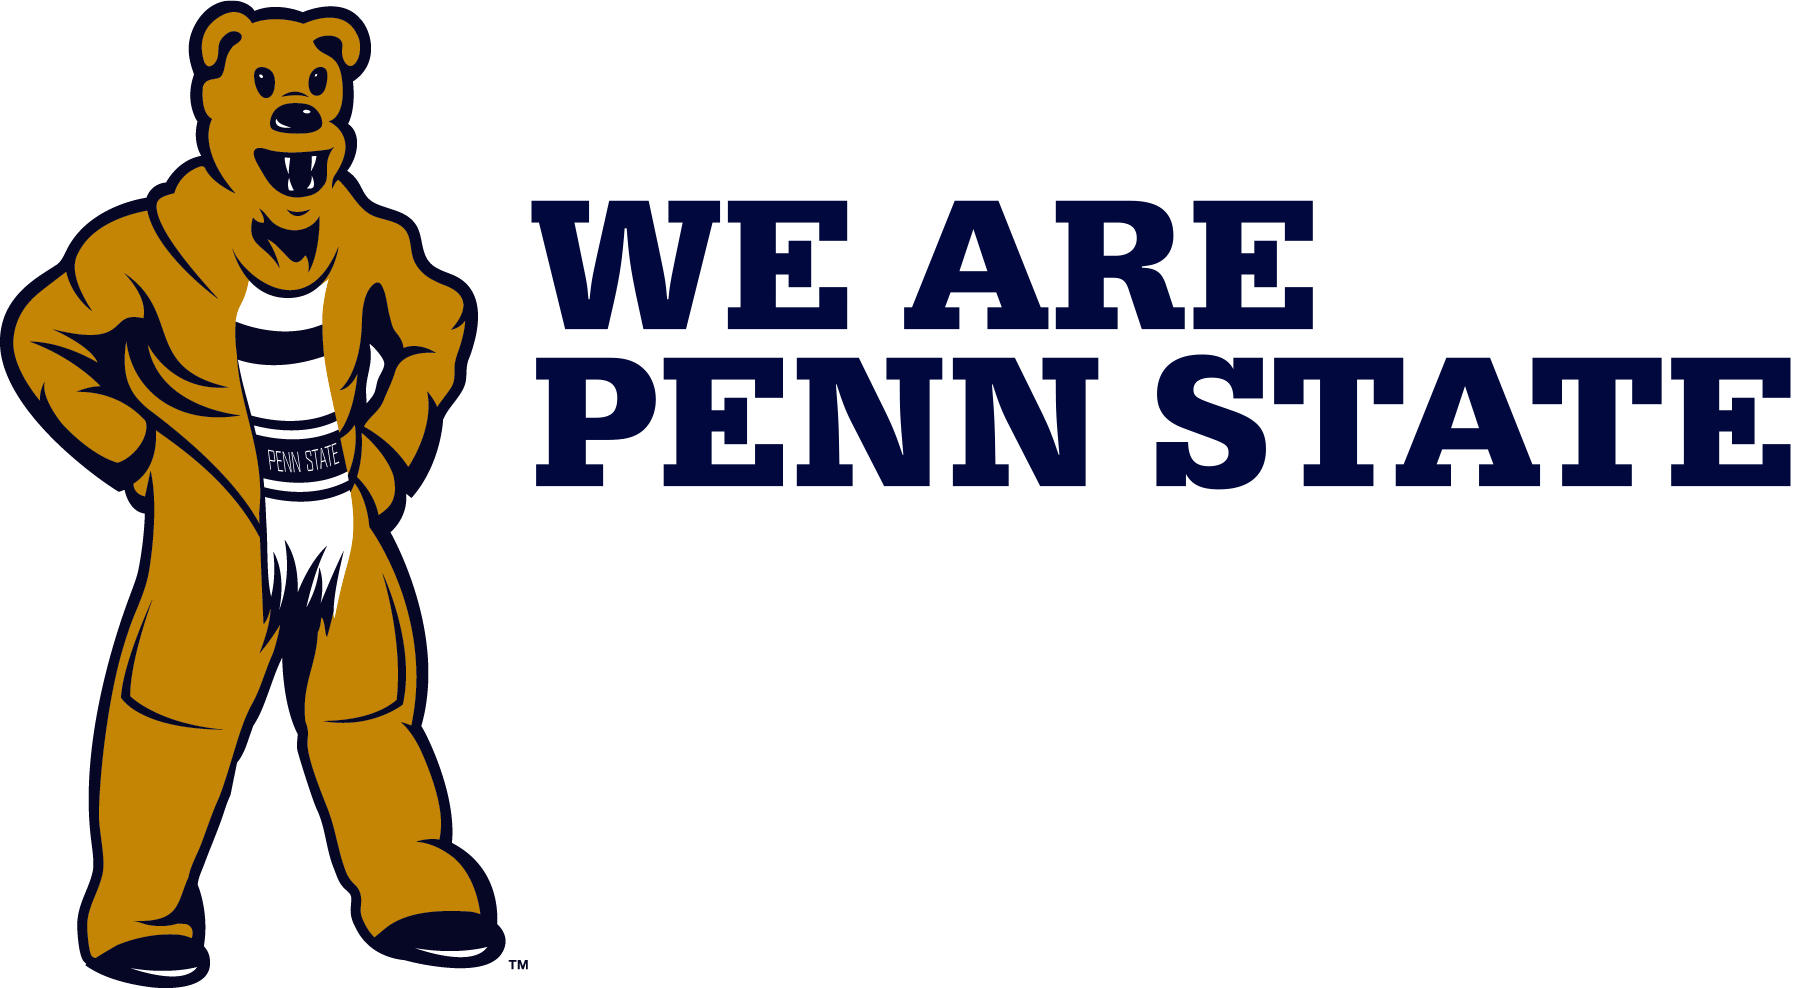 Penn State Pennsylvania Sticker by Penn State Abington